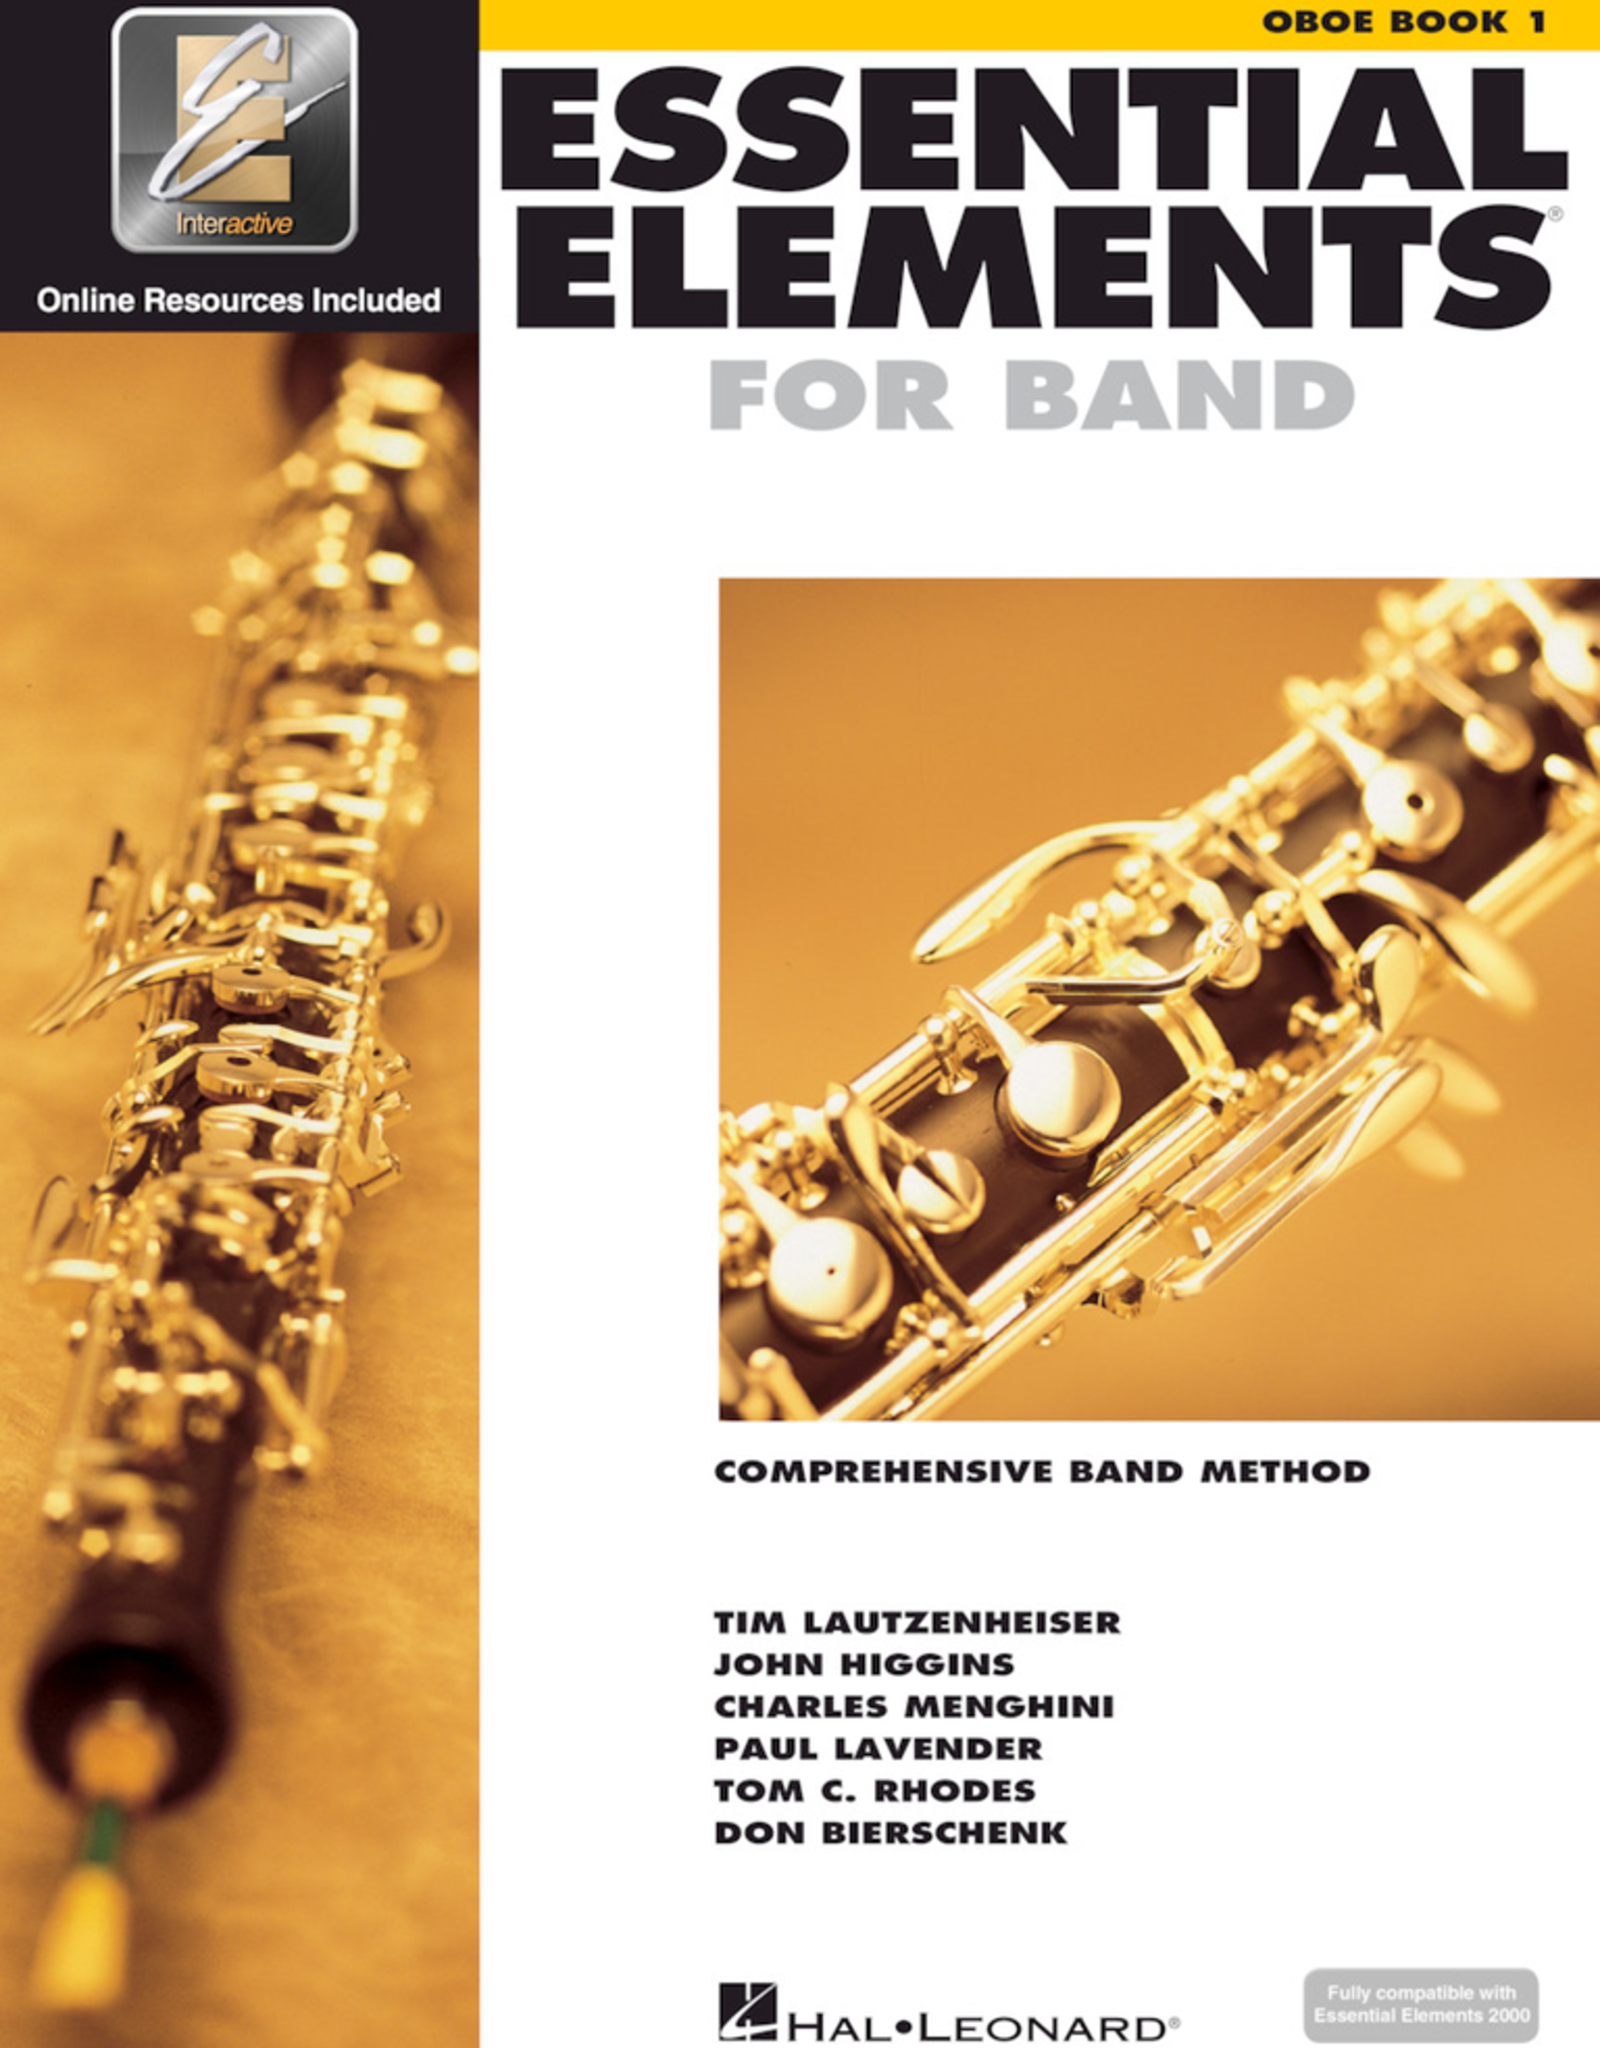 Hal Leonard Essential Elements Book 1 Oboe